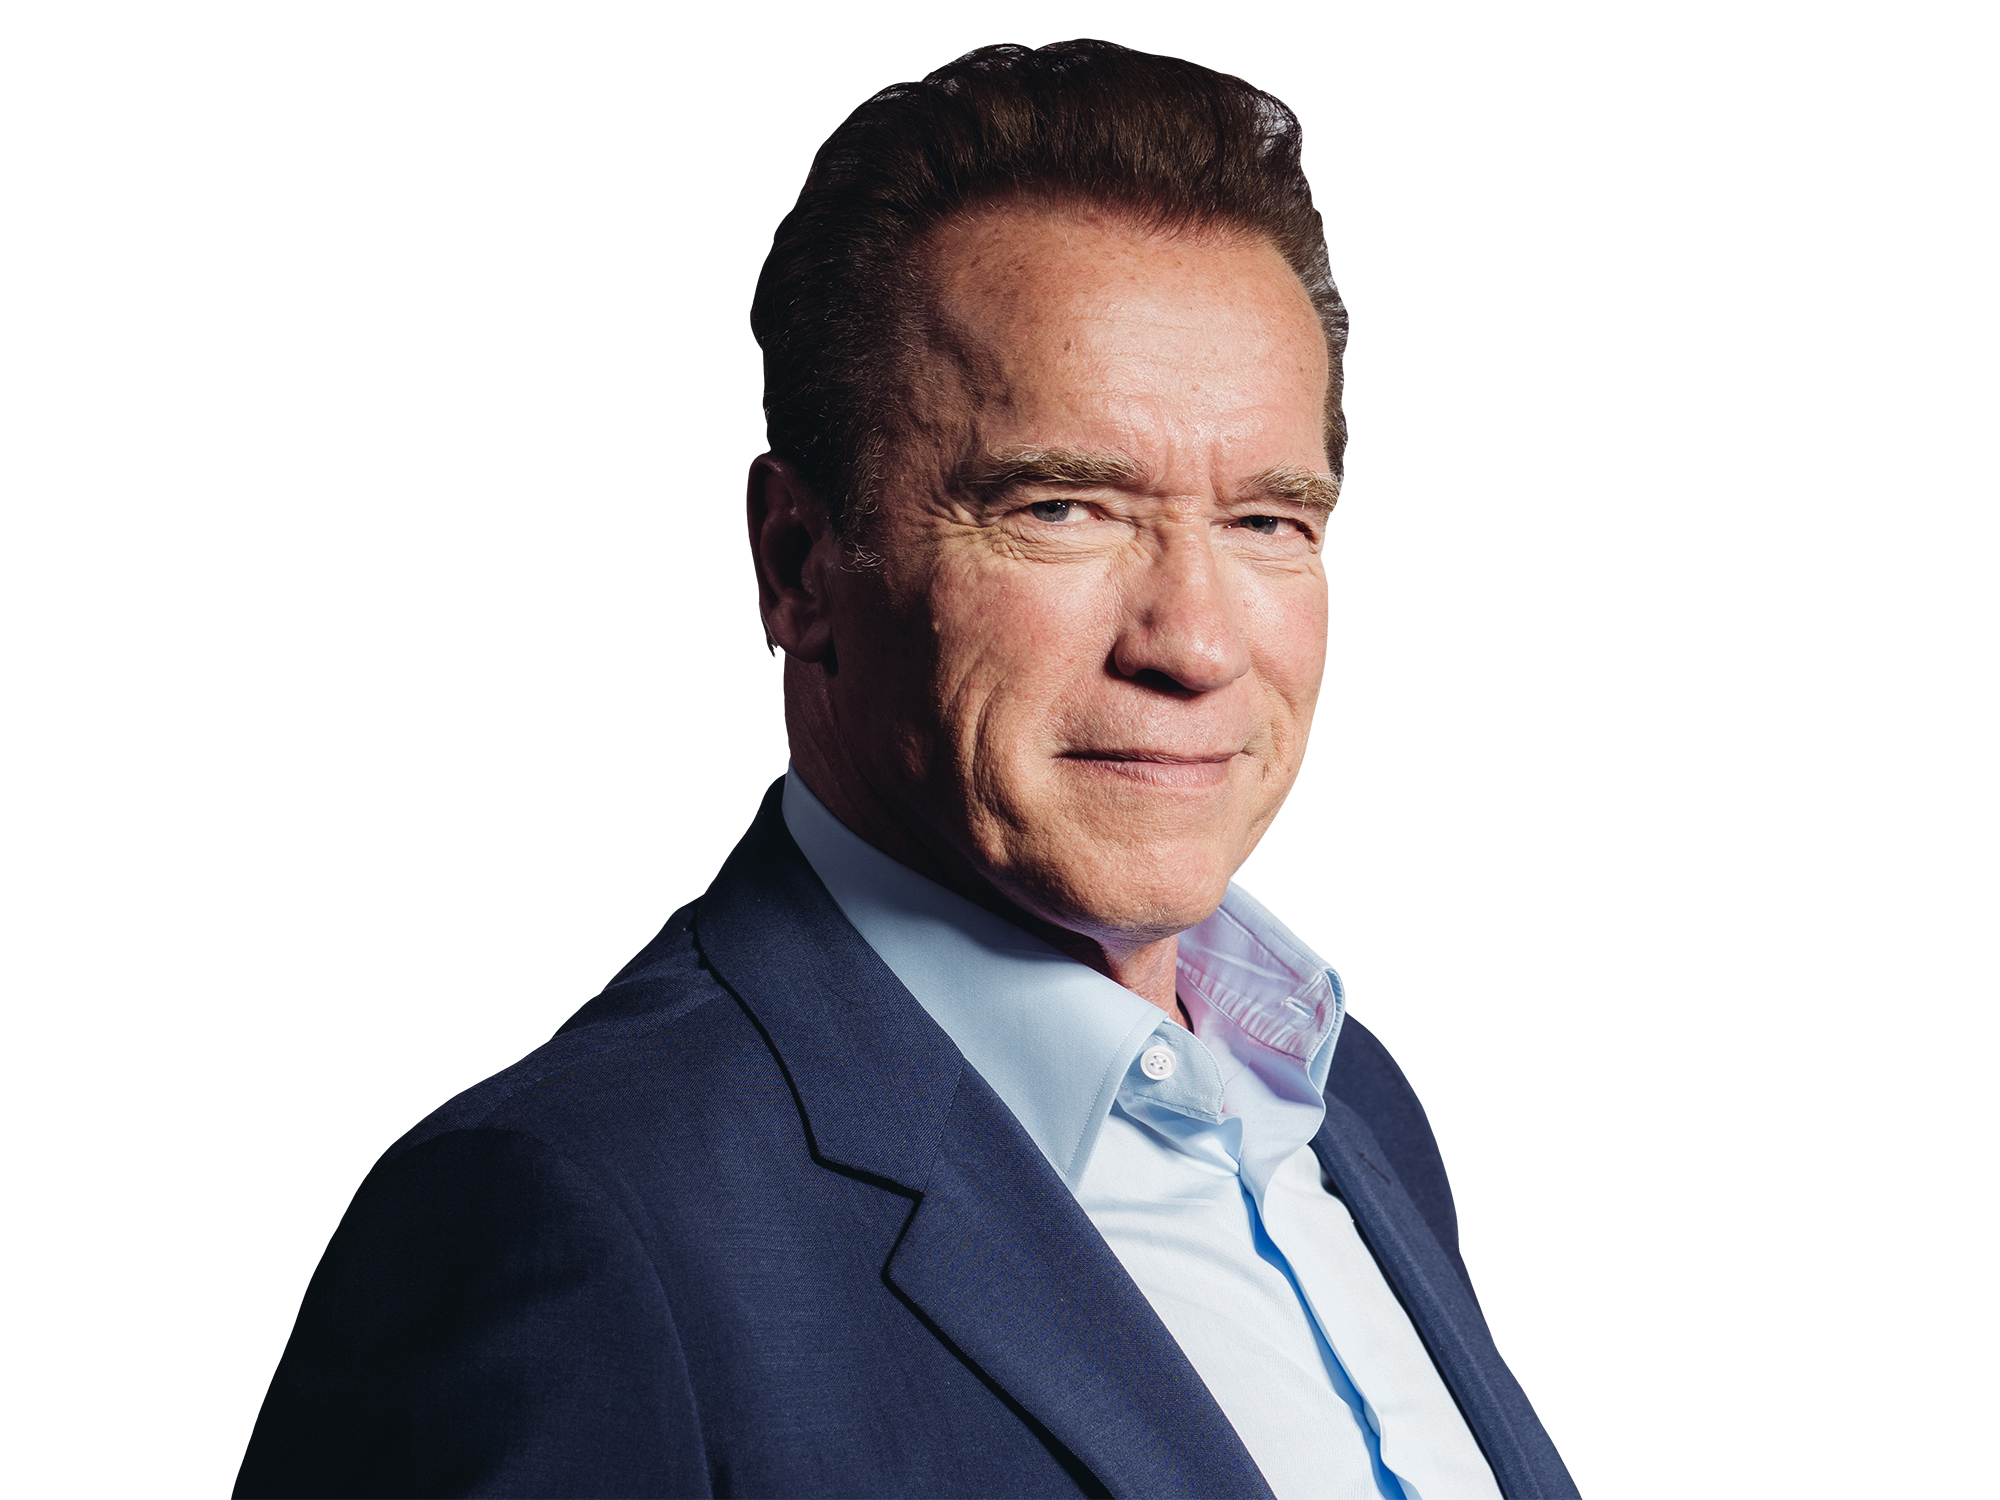 Arnold Schwarzenegger PNG Picture